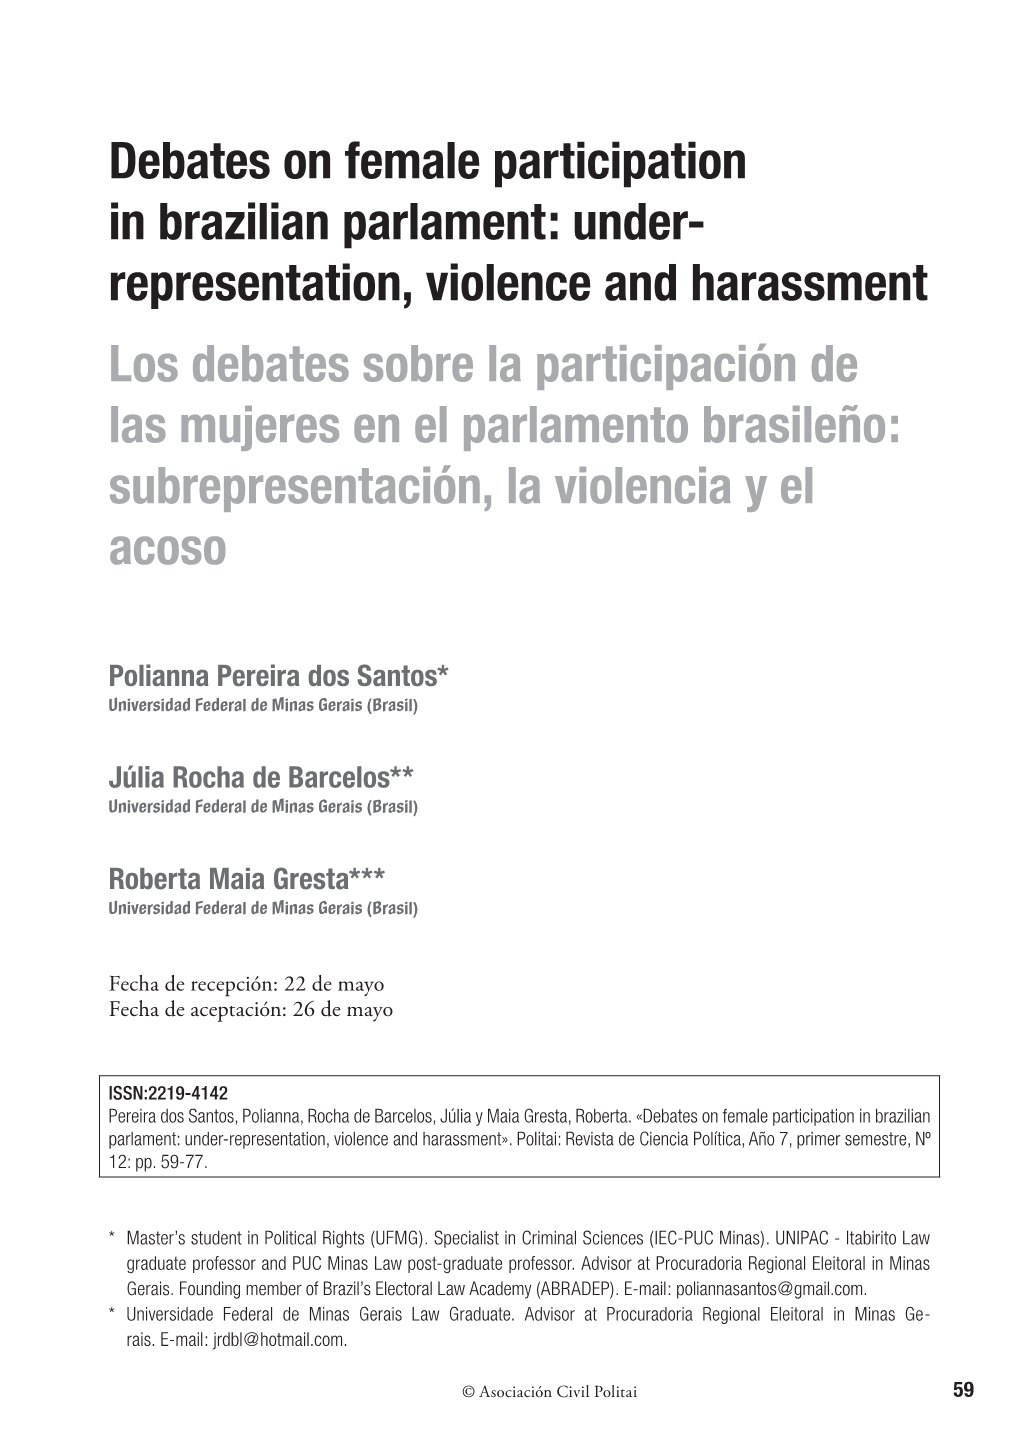 Debates on Female Participation in Brazilian Parlament